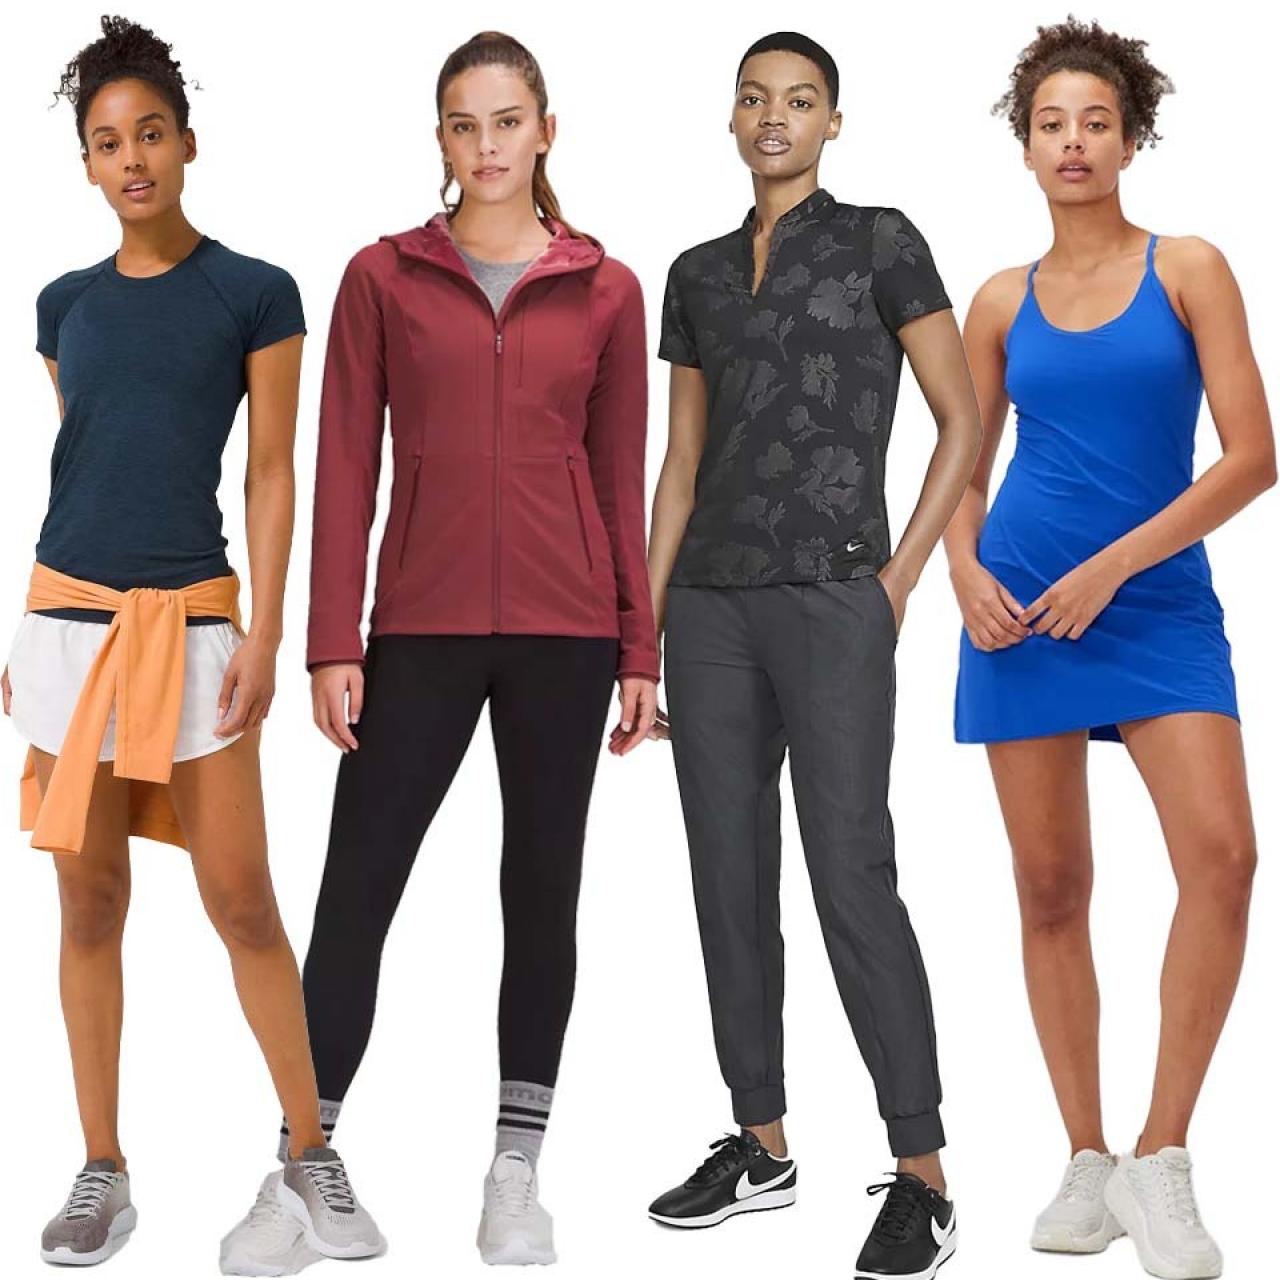  Women's Athleisure Clothes